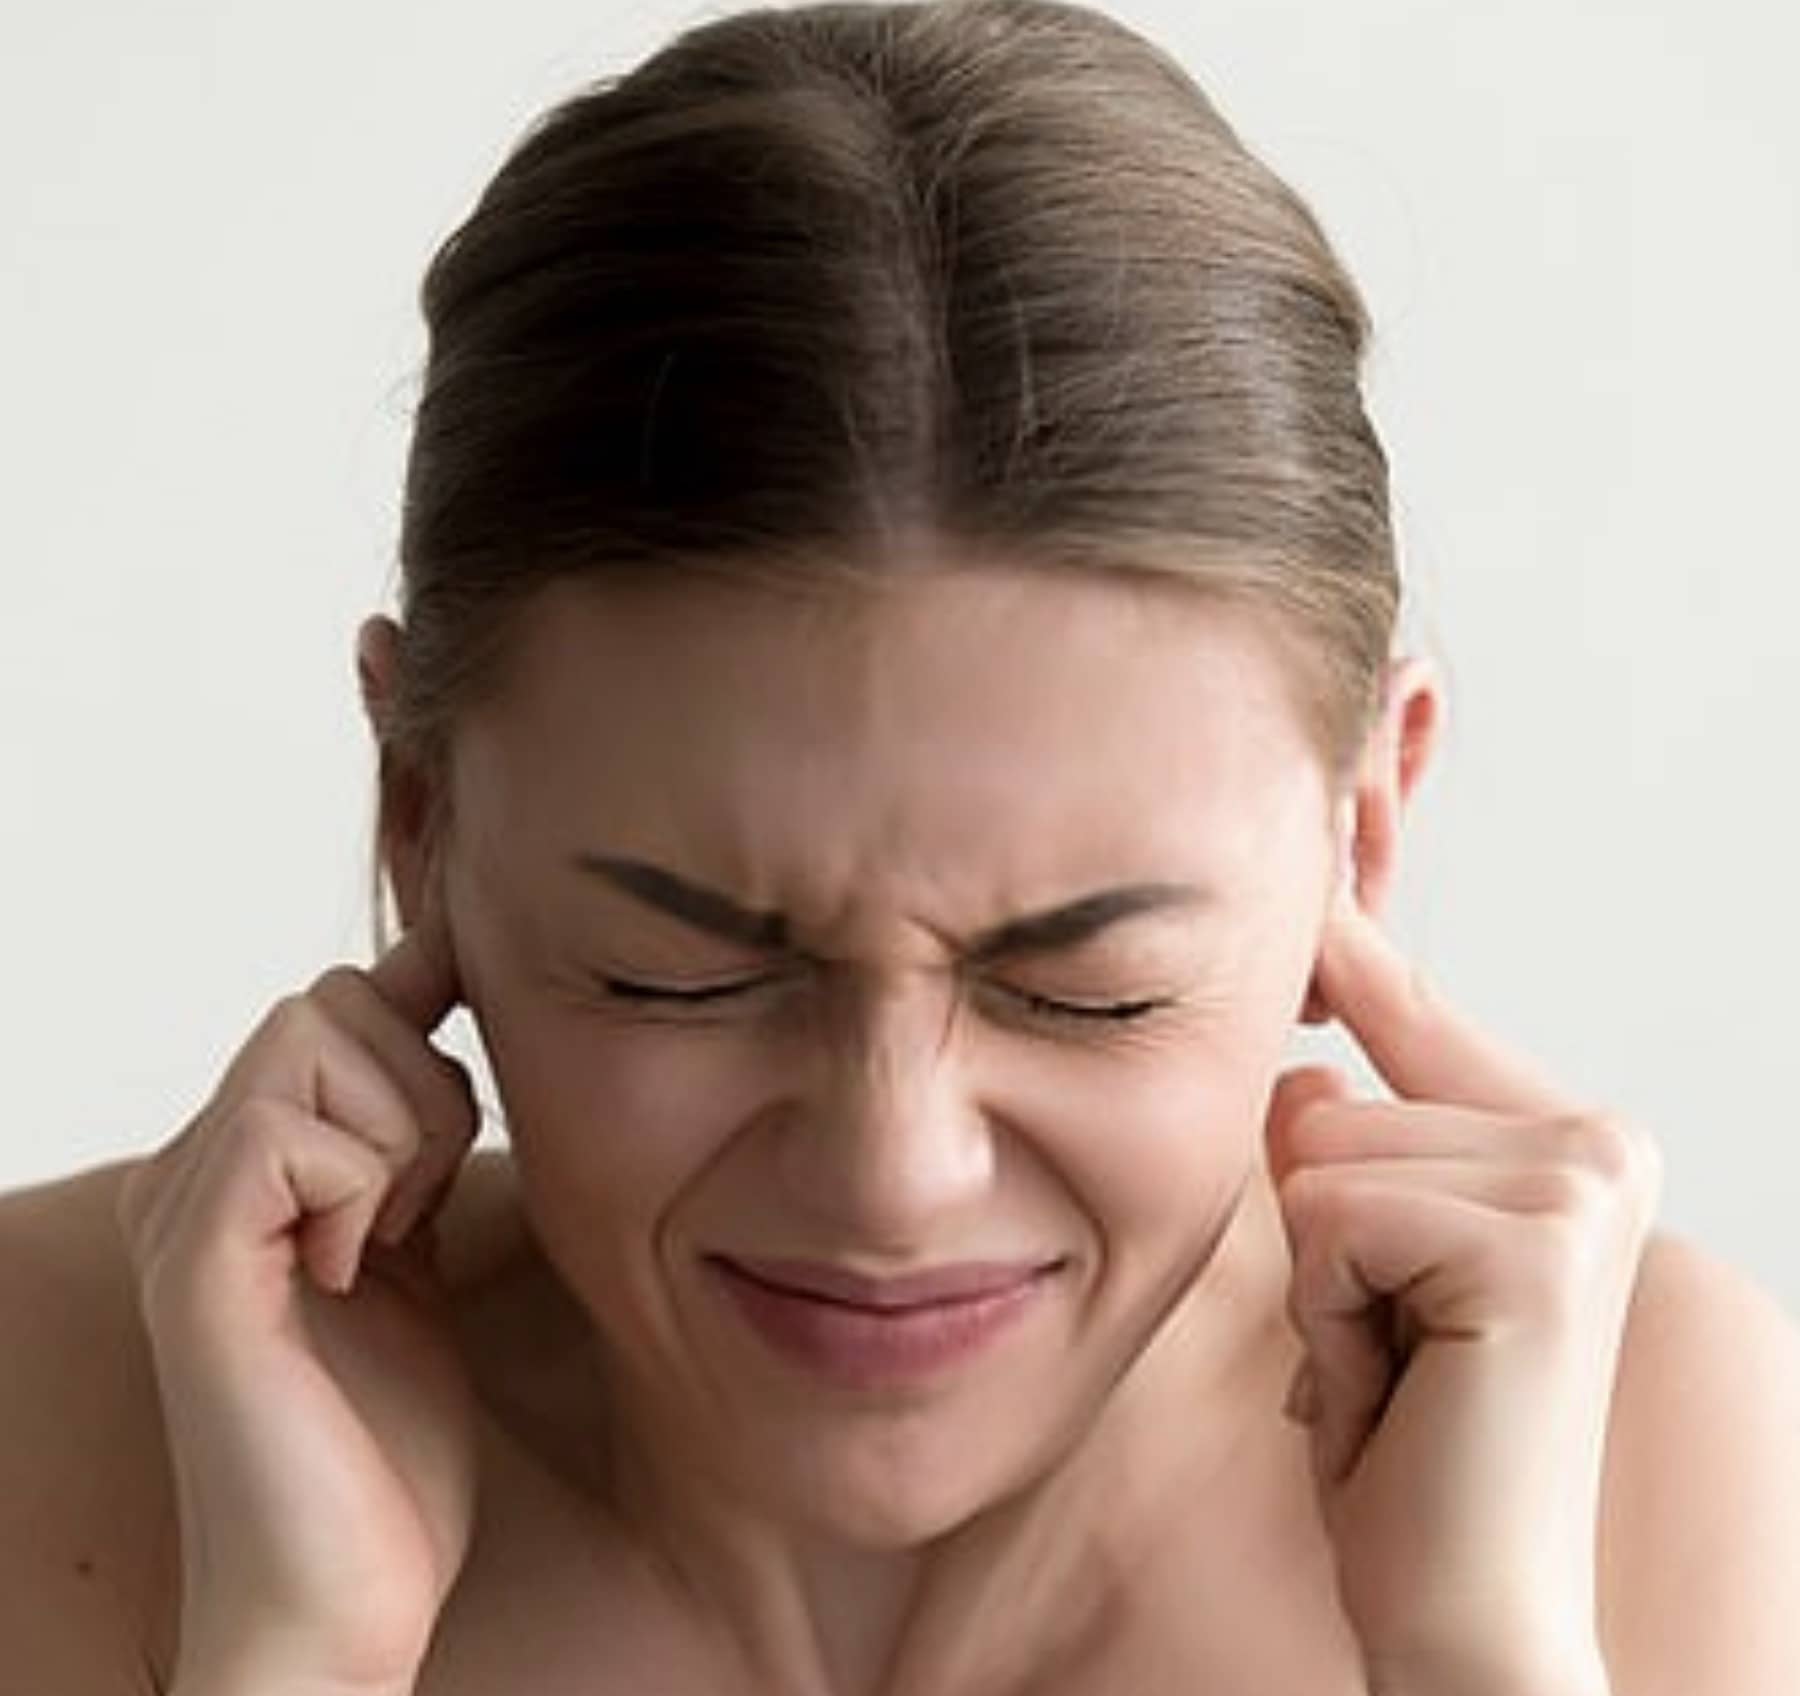 Tinnitus: Symptoms and Treatments